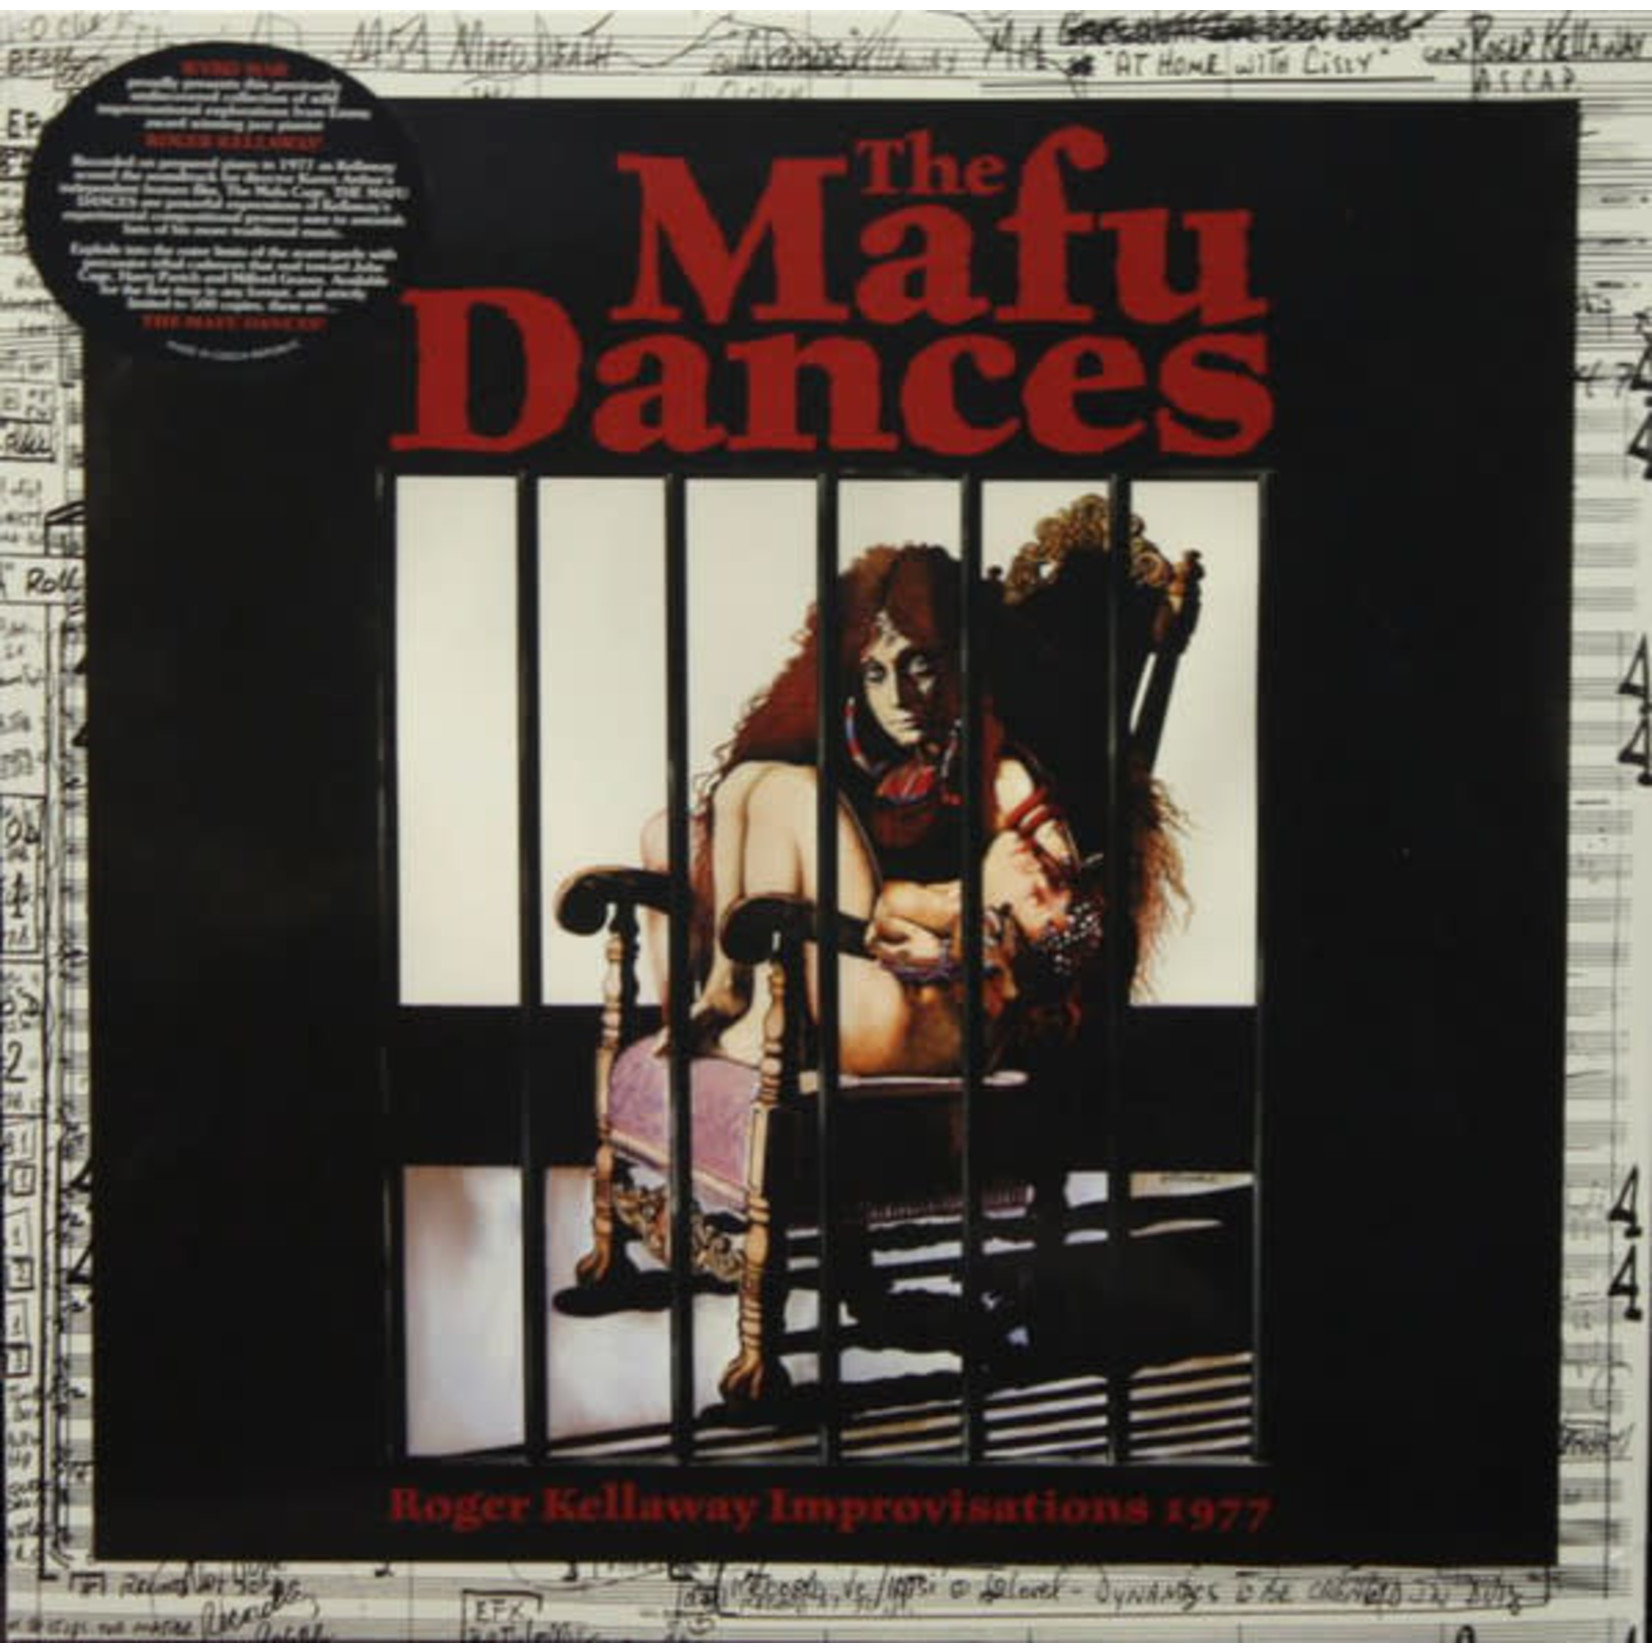 Roger Kellaway - The Mafu Dances (LP)